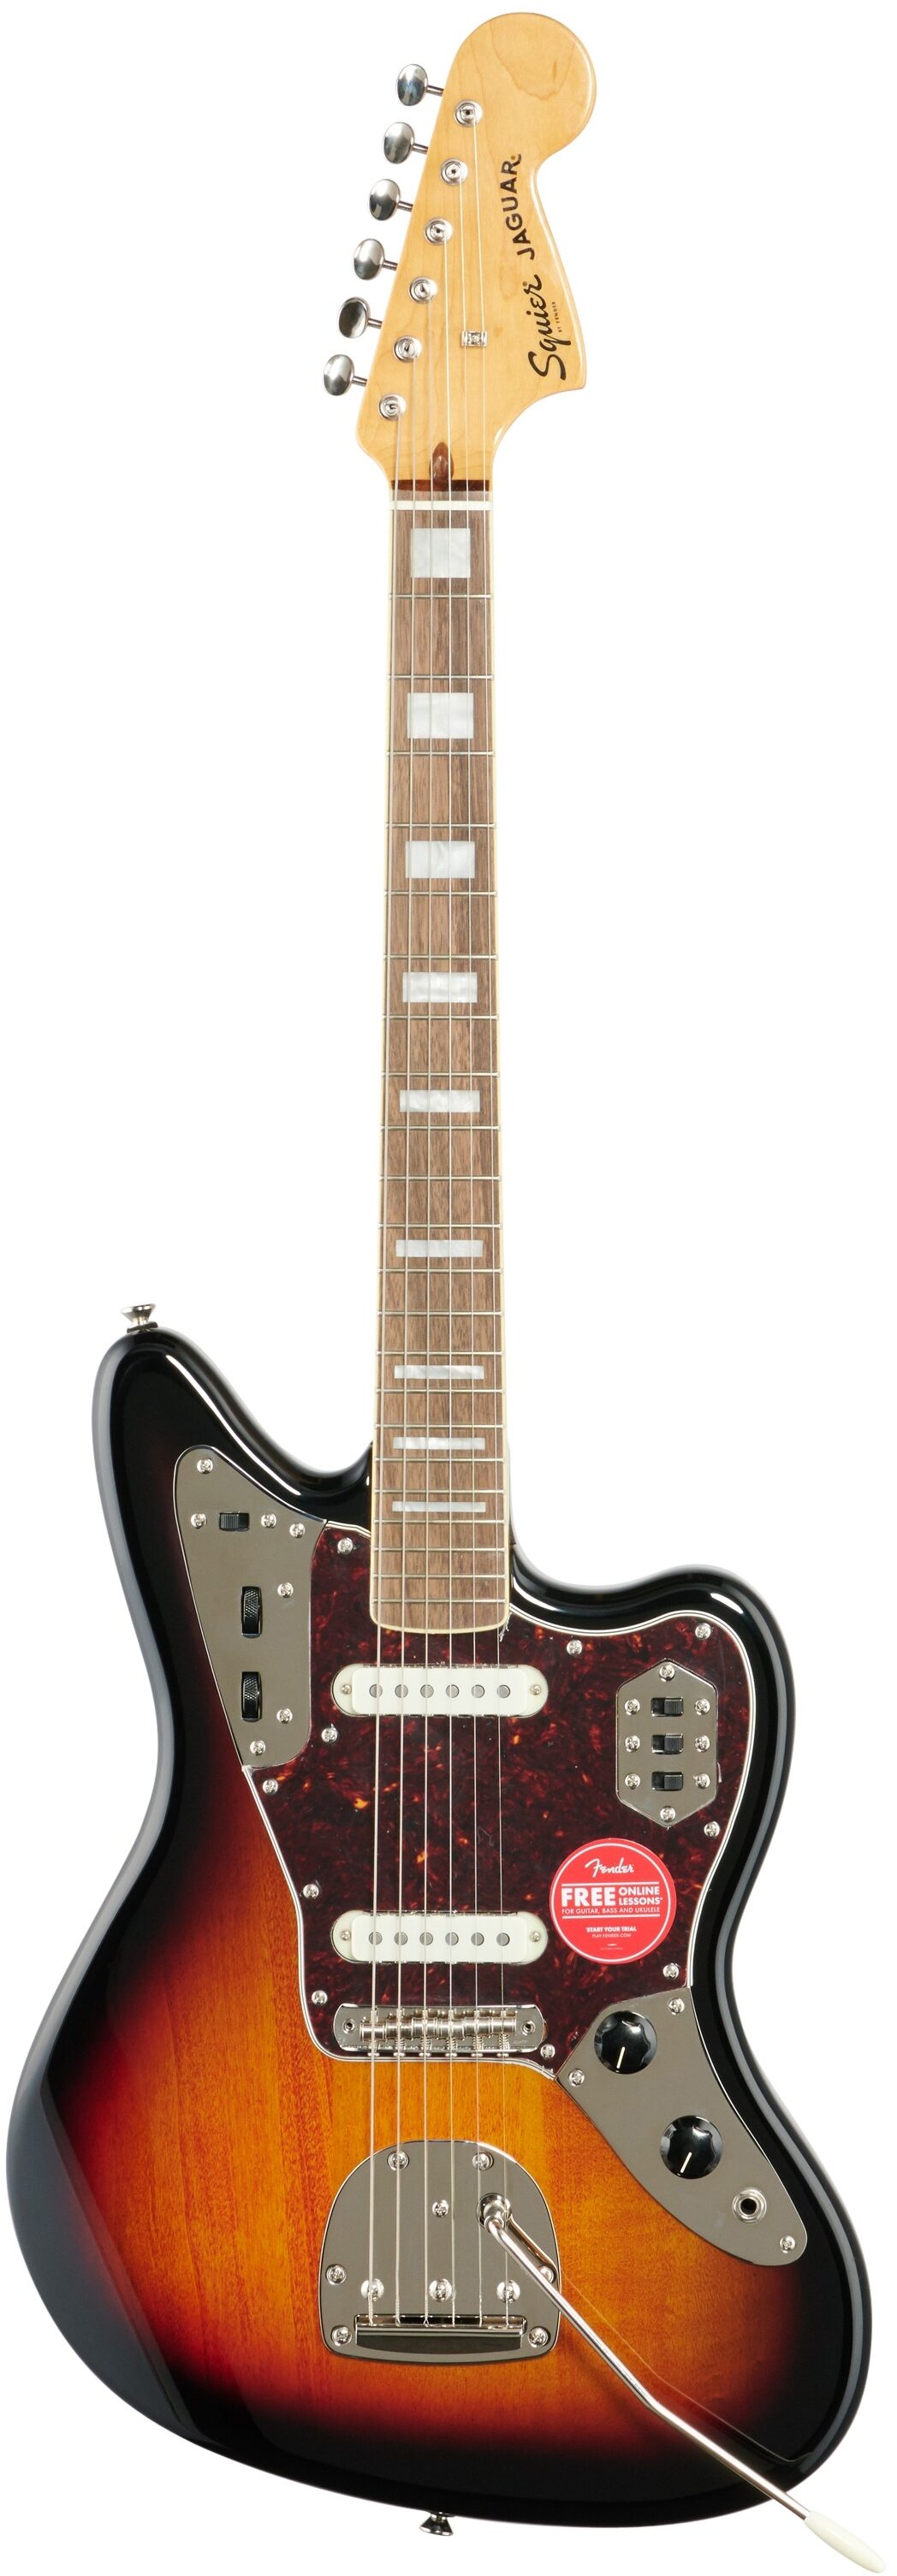 Squier Classic Vibe '70s Jaguar Electric Guitar, with Laurel Fingerboard